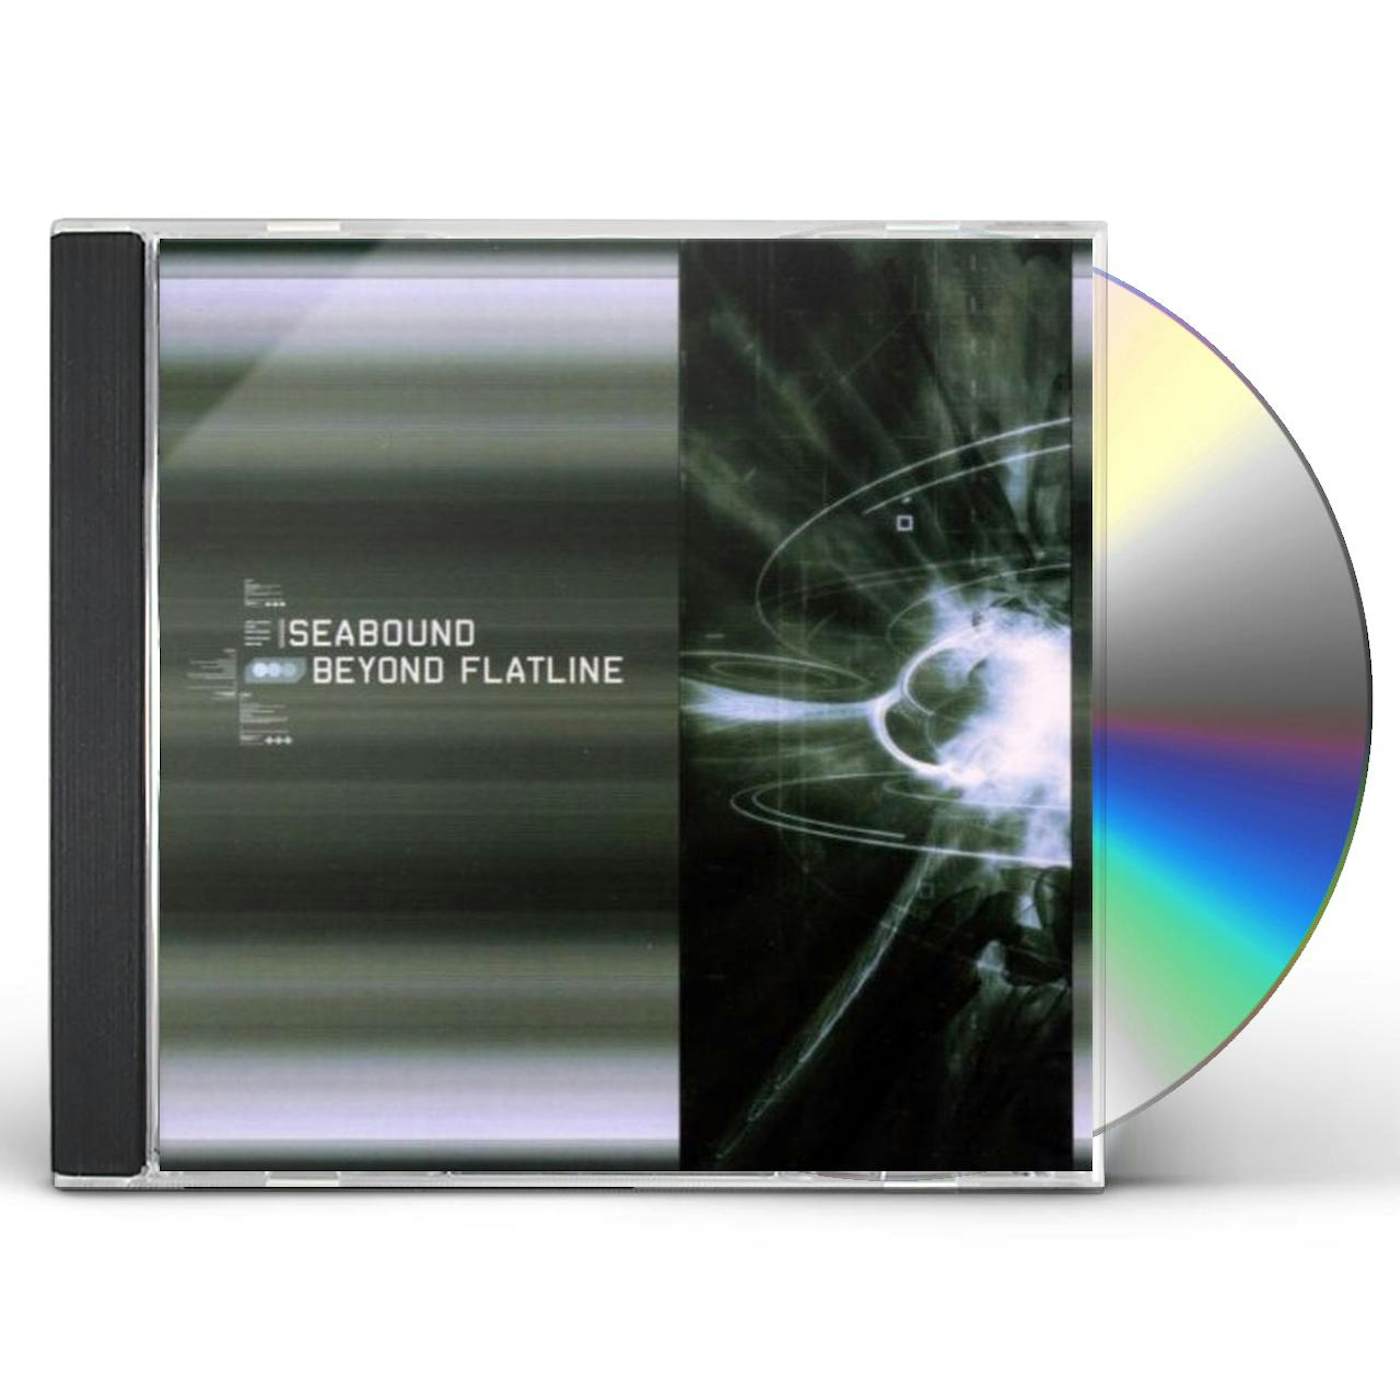 Seabound BEYOND FLATLINE CD